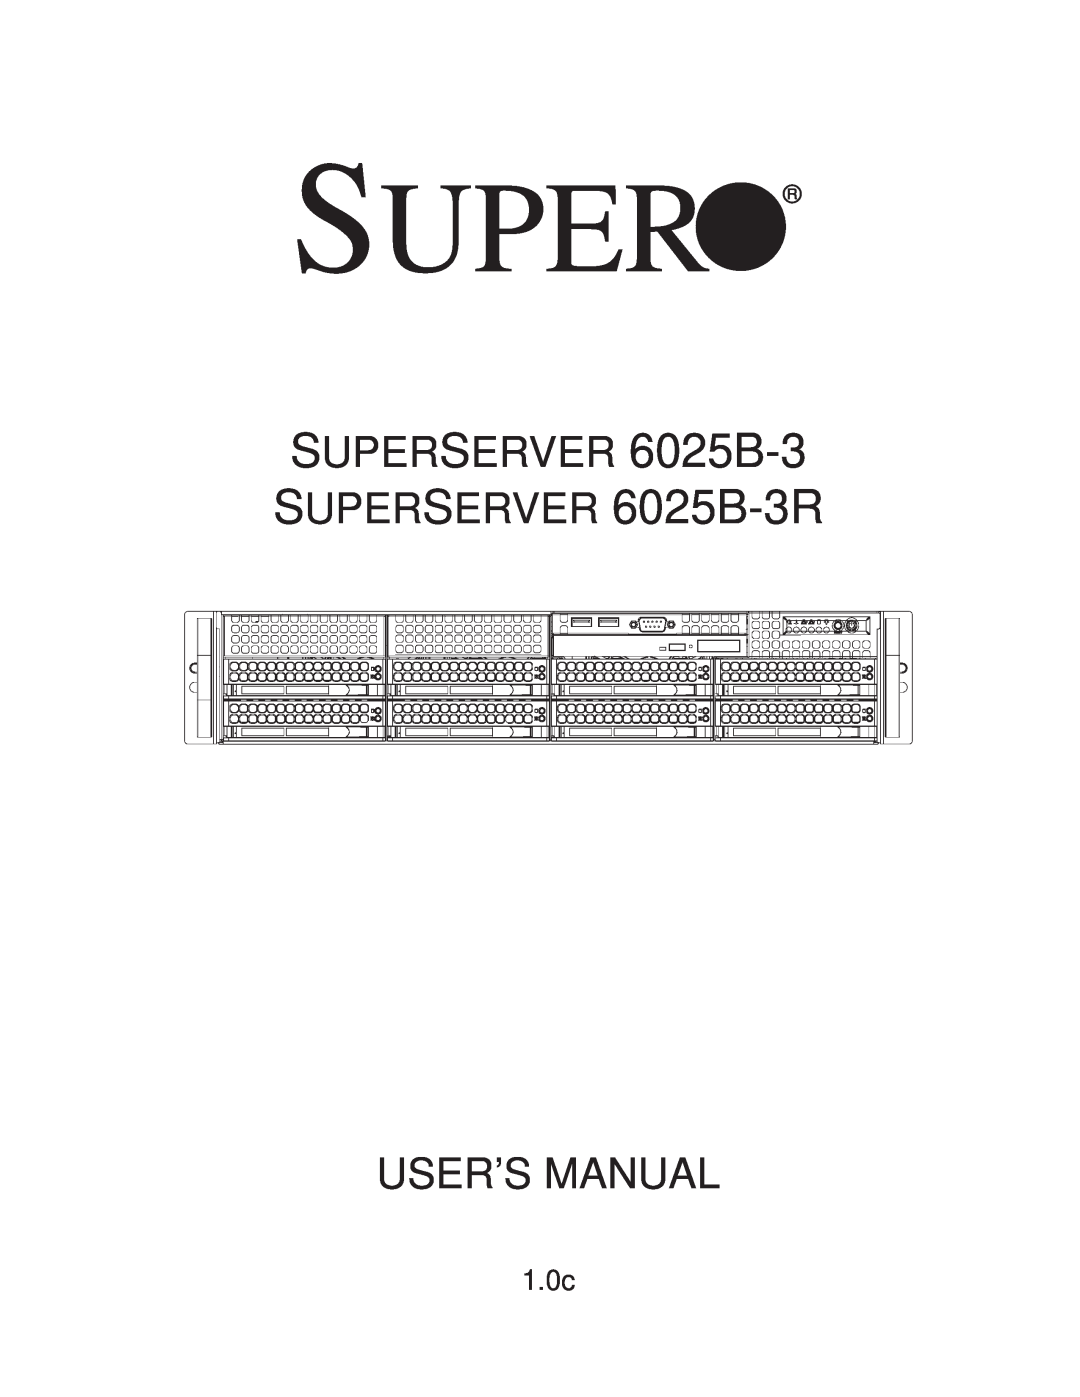 SUPER MICRO Computer user manual 1.0c, Super, SUPERSERVER 6025B-3 SUPERSERVER 6025B-3R, User’S Manual 